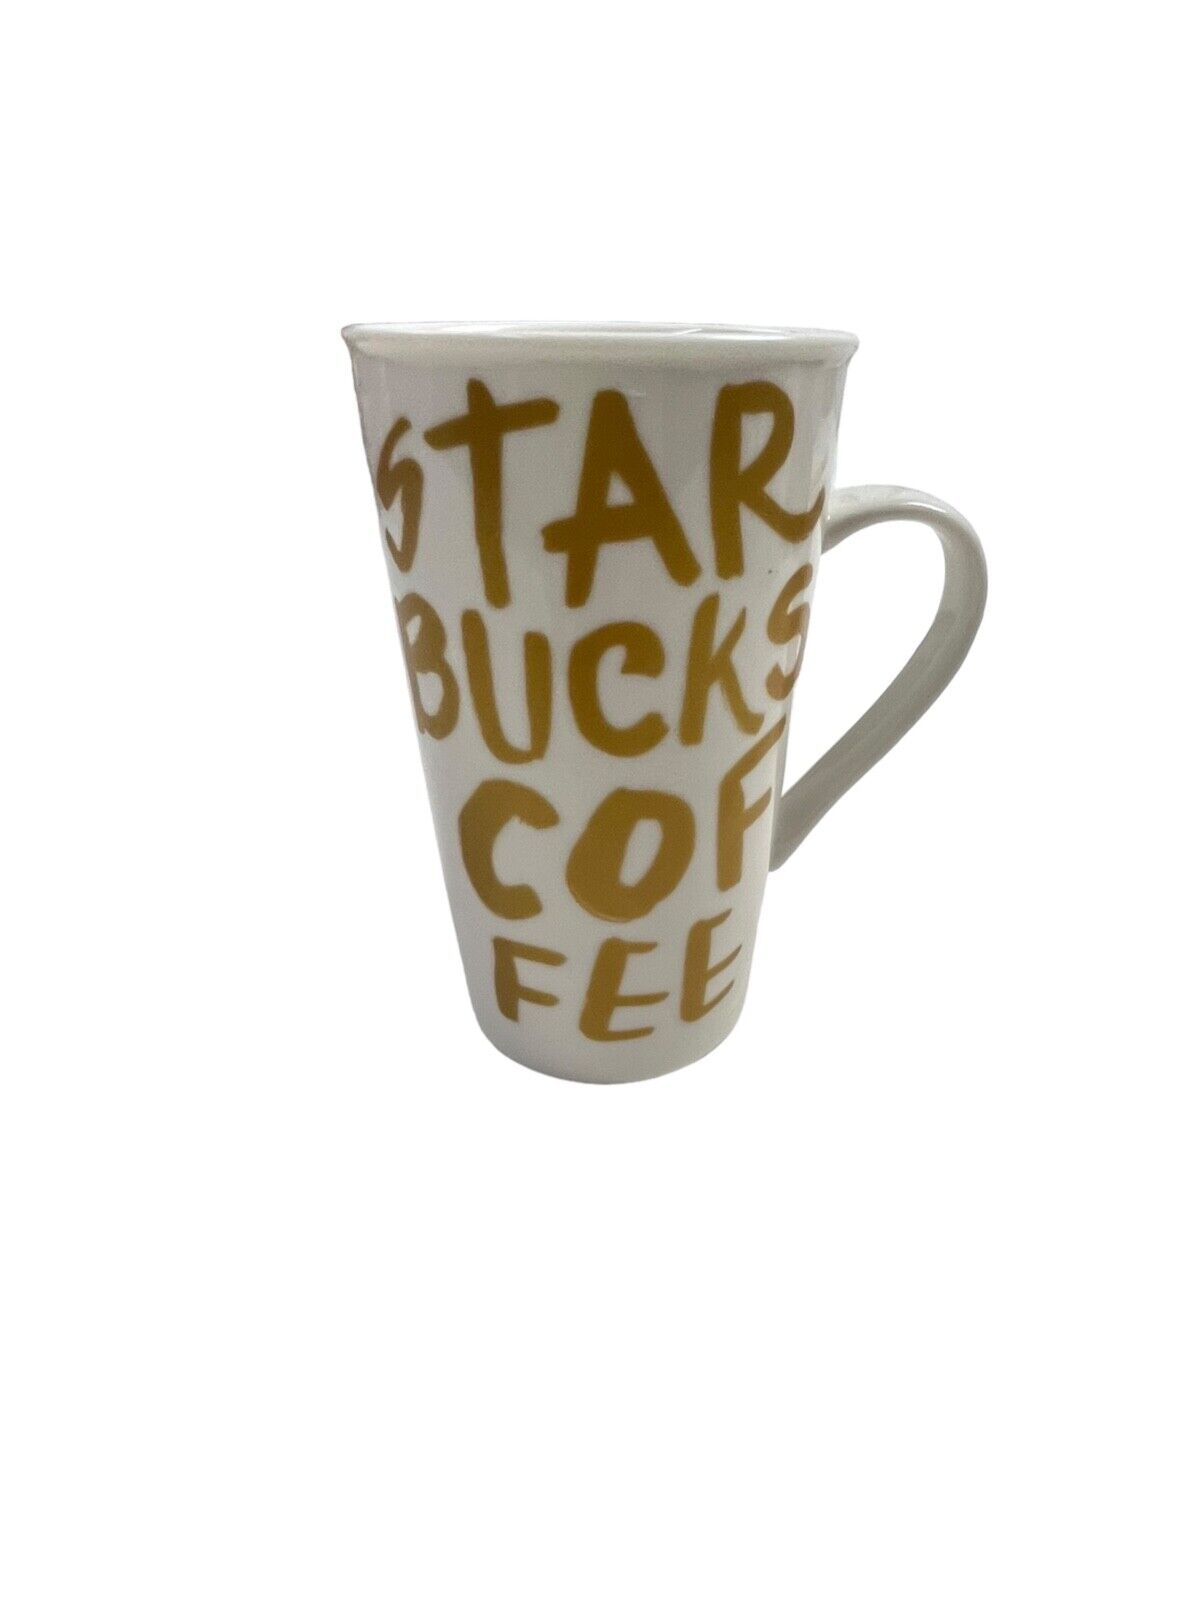 Starbucks 2015 16oz Ceramic Coffee Mug White with Gold Graffiti Letters